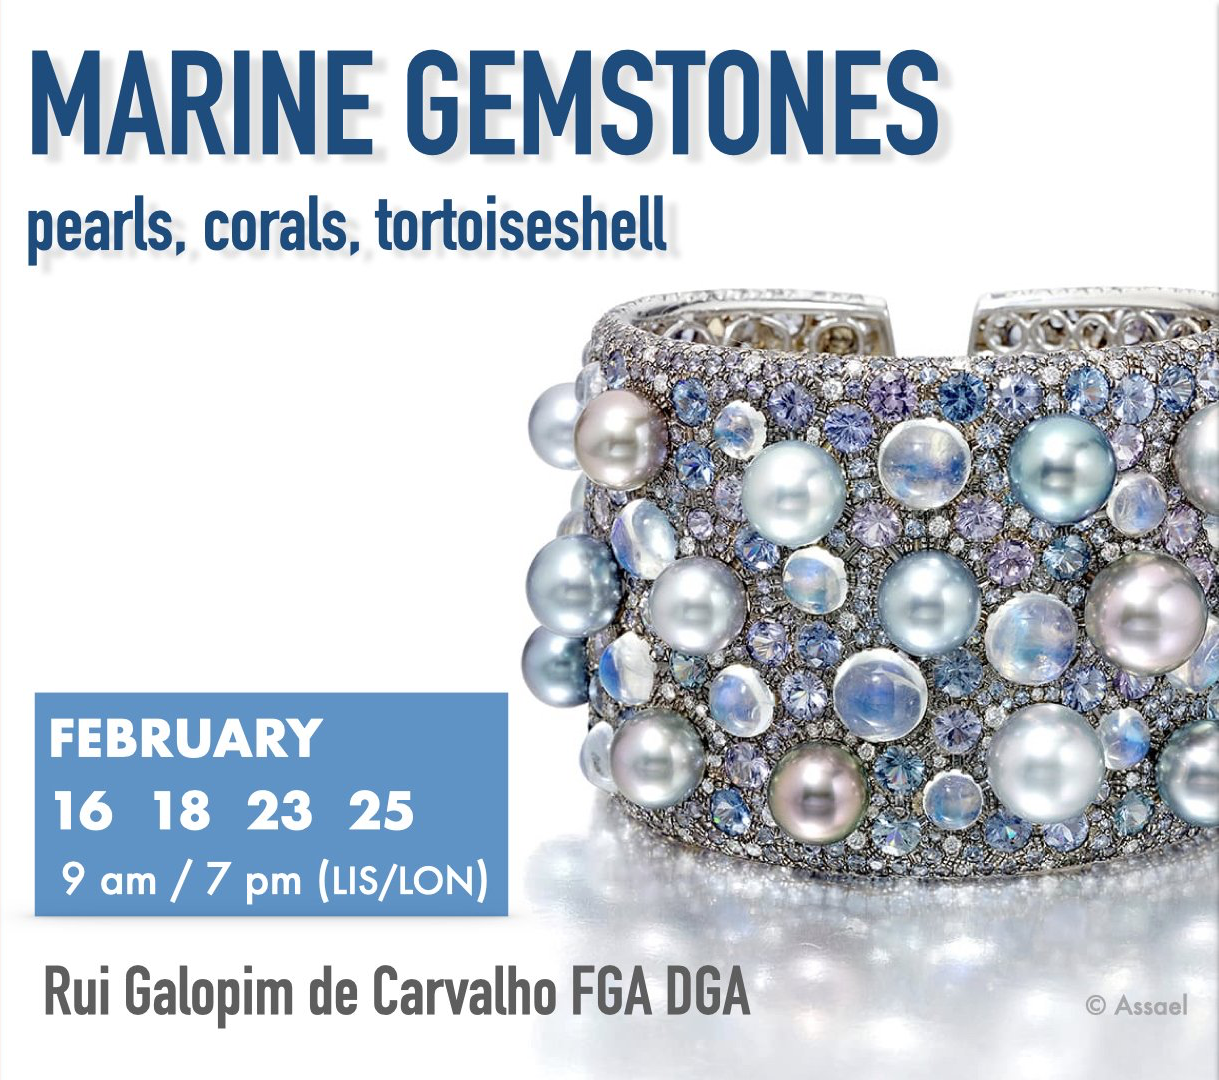 marine-gemstone-covers.002-1920w.png